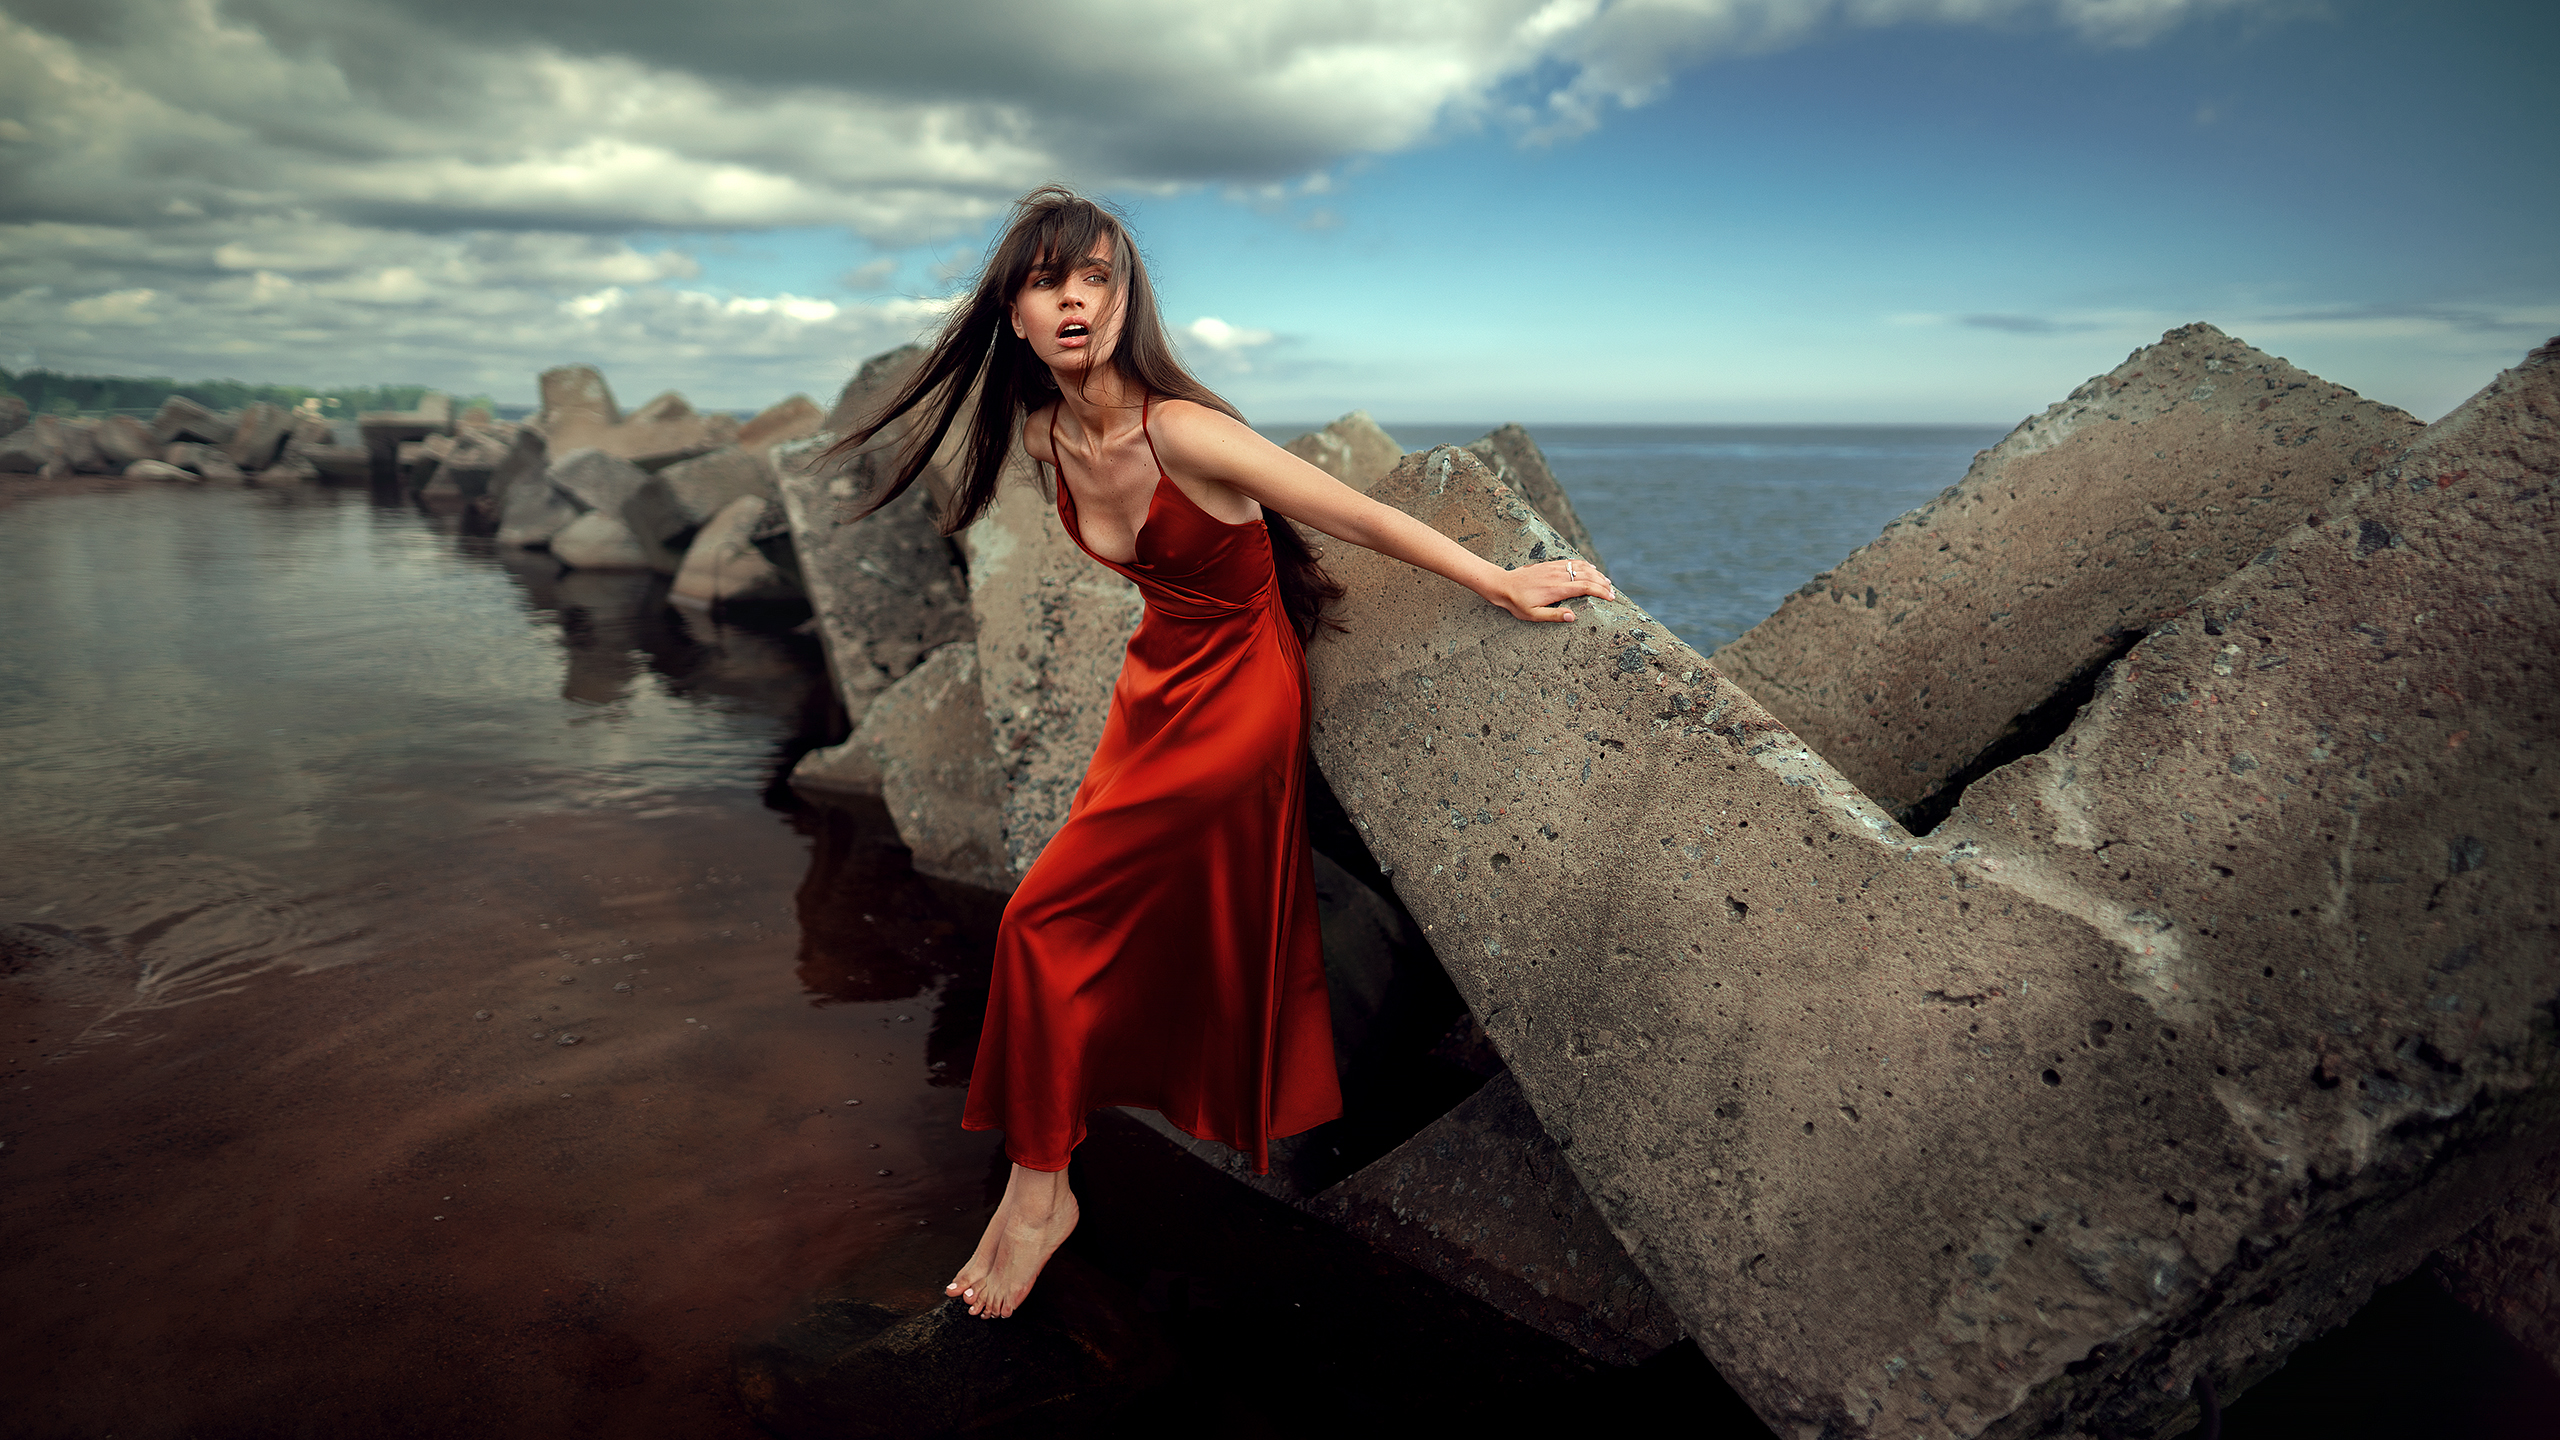 Red Dress Women Women Outdoors Water Concrete Brunette Barefoot 2560x1440